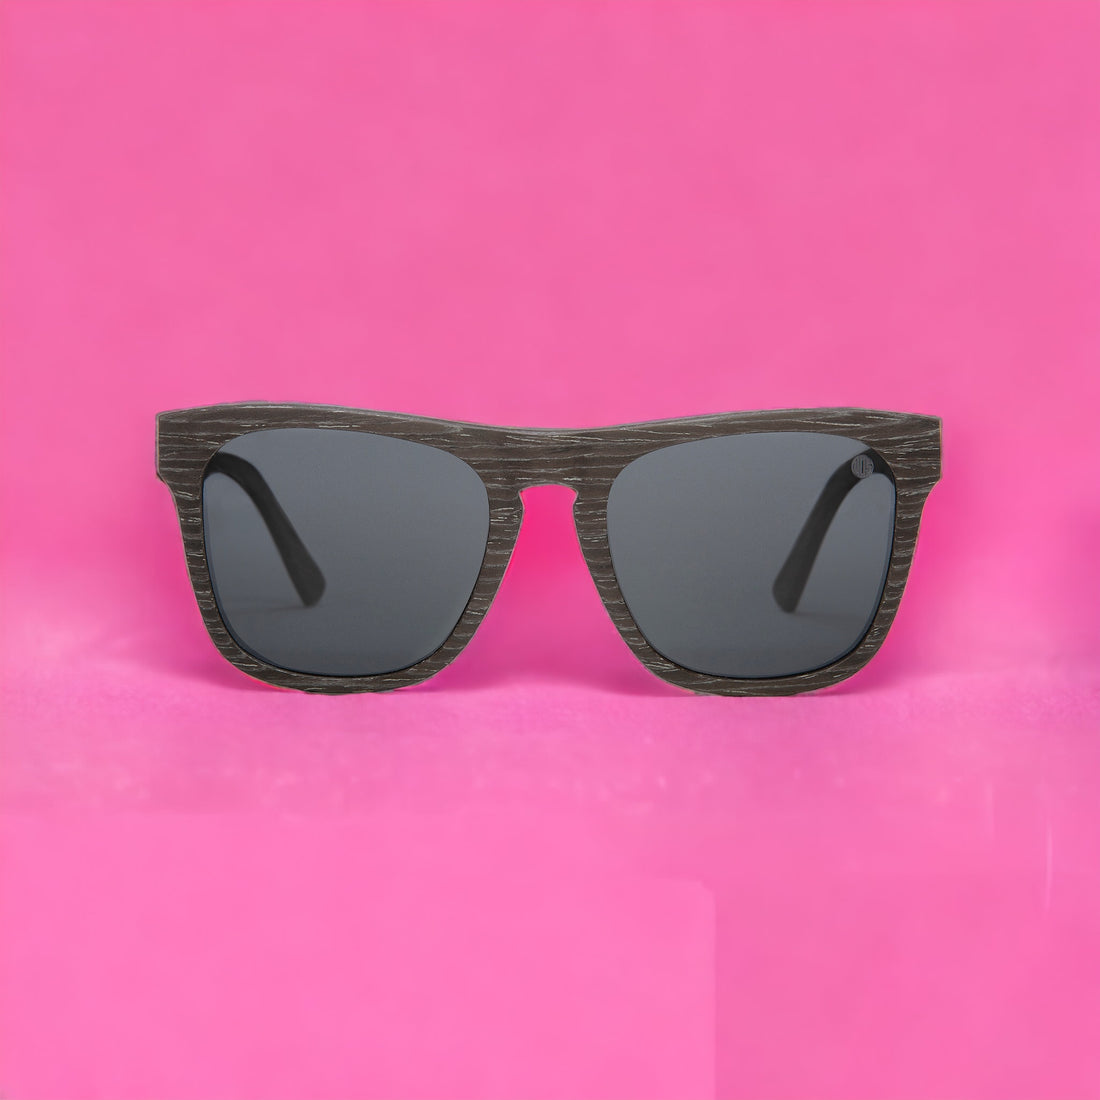 Square shaped sunglasses suit round faces